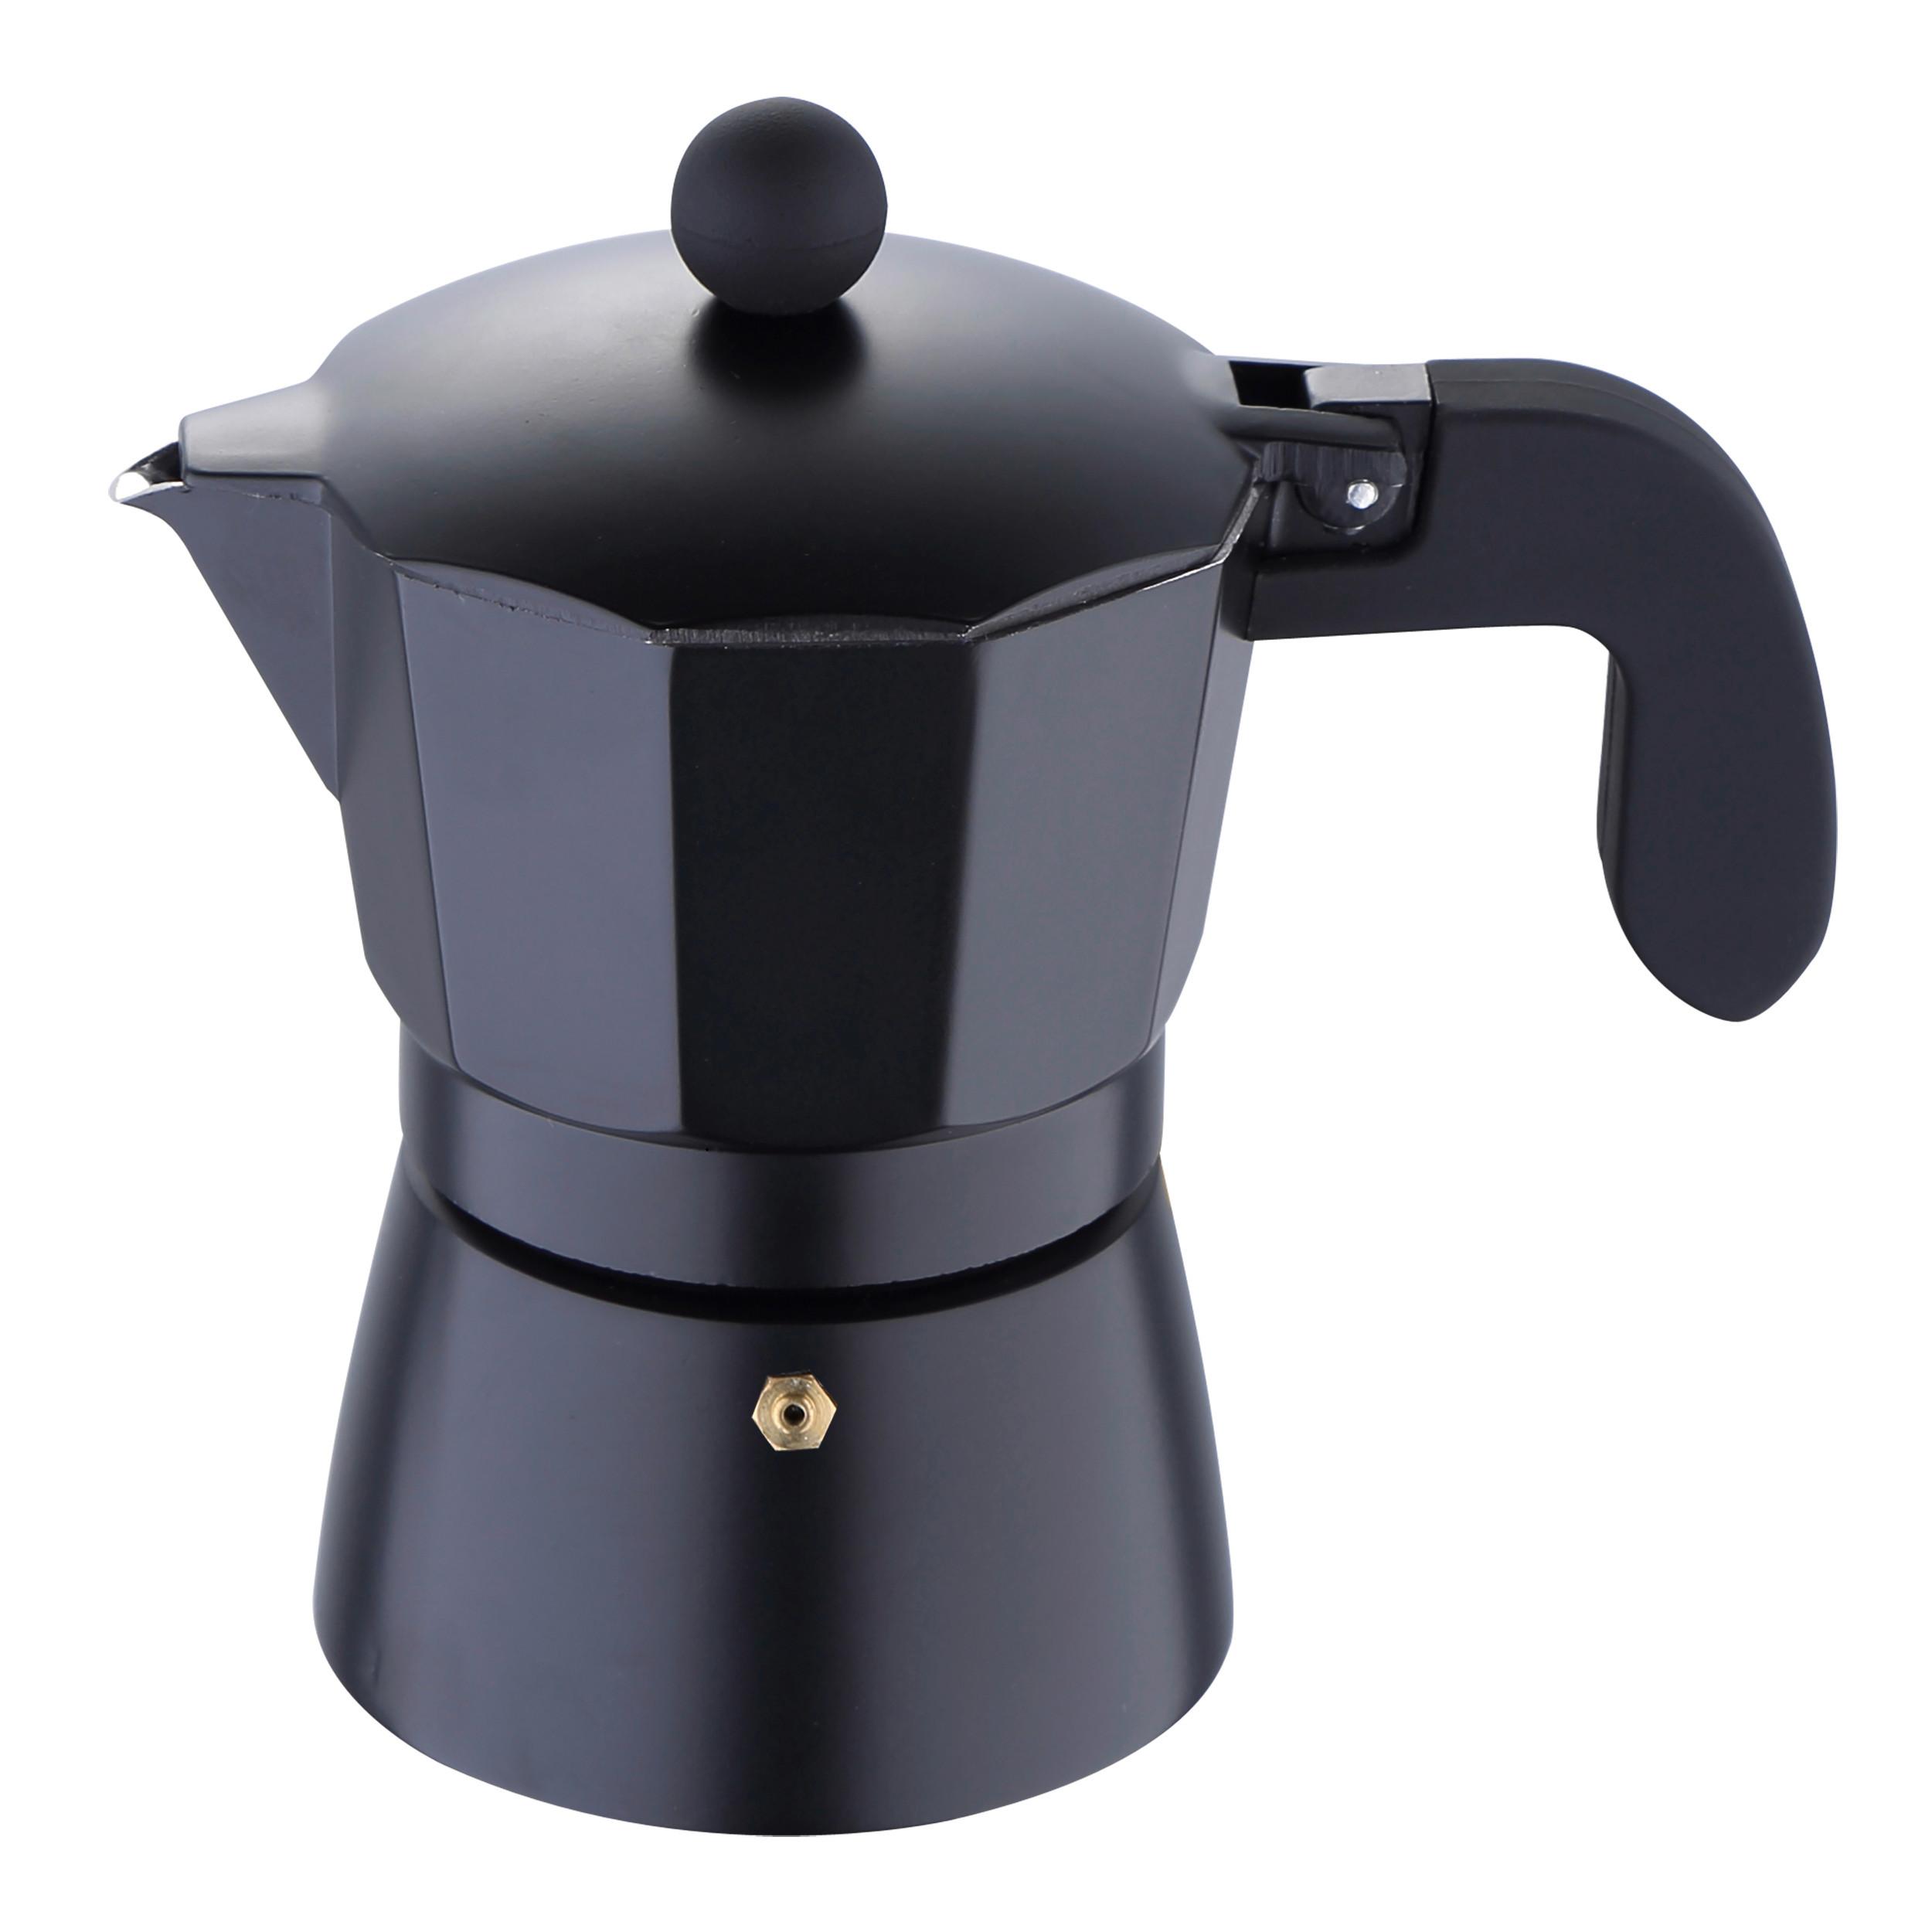 Espressokocher Florencia ca. 120ml - Schwarz, MODERN, Kunststoff/Metall (0.12l)